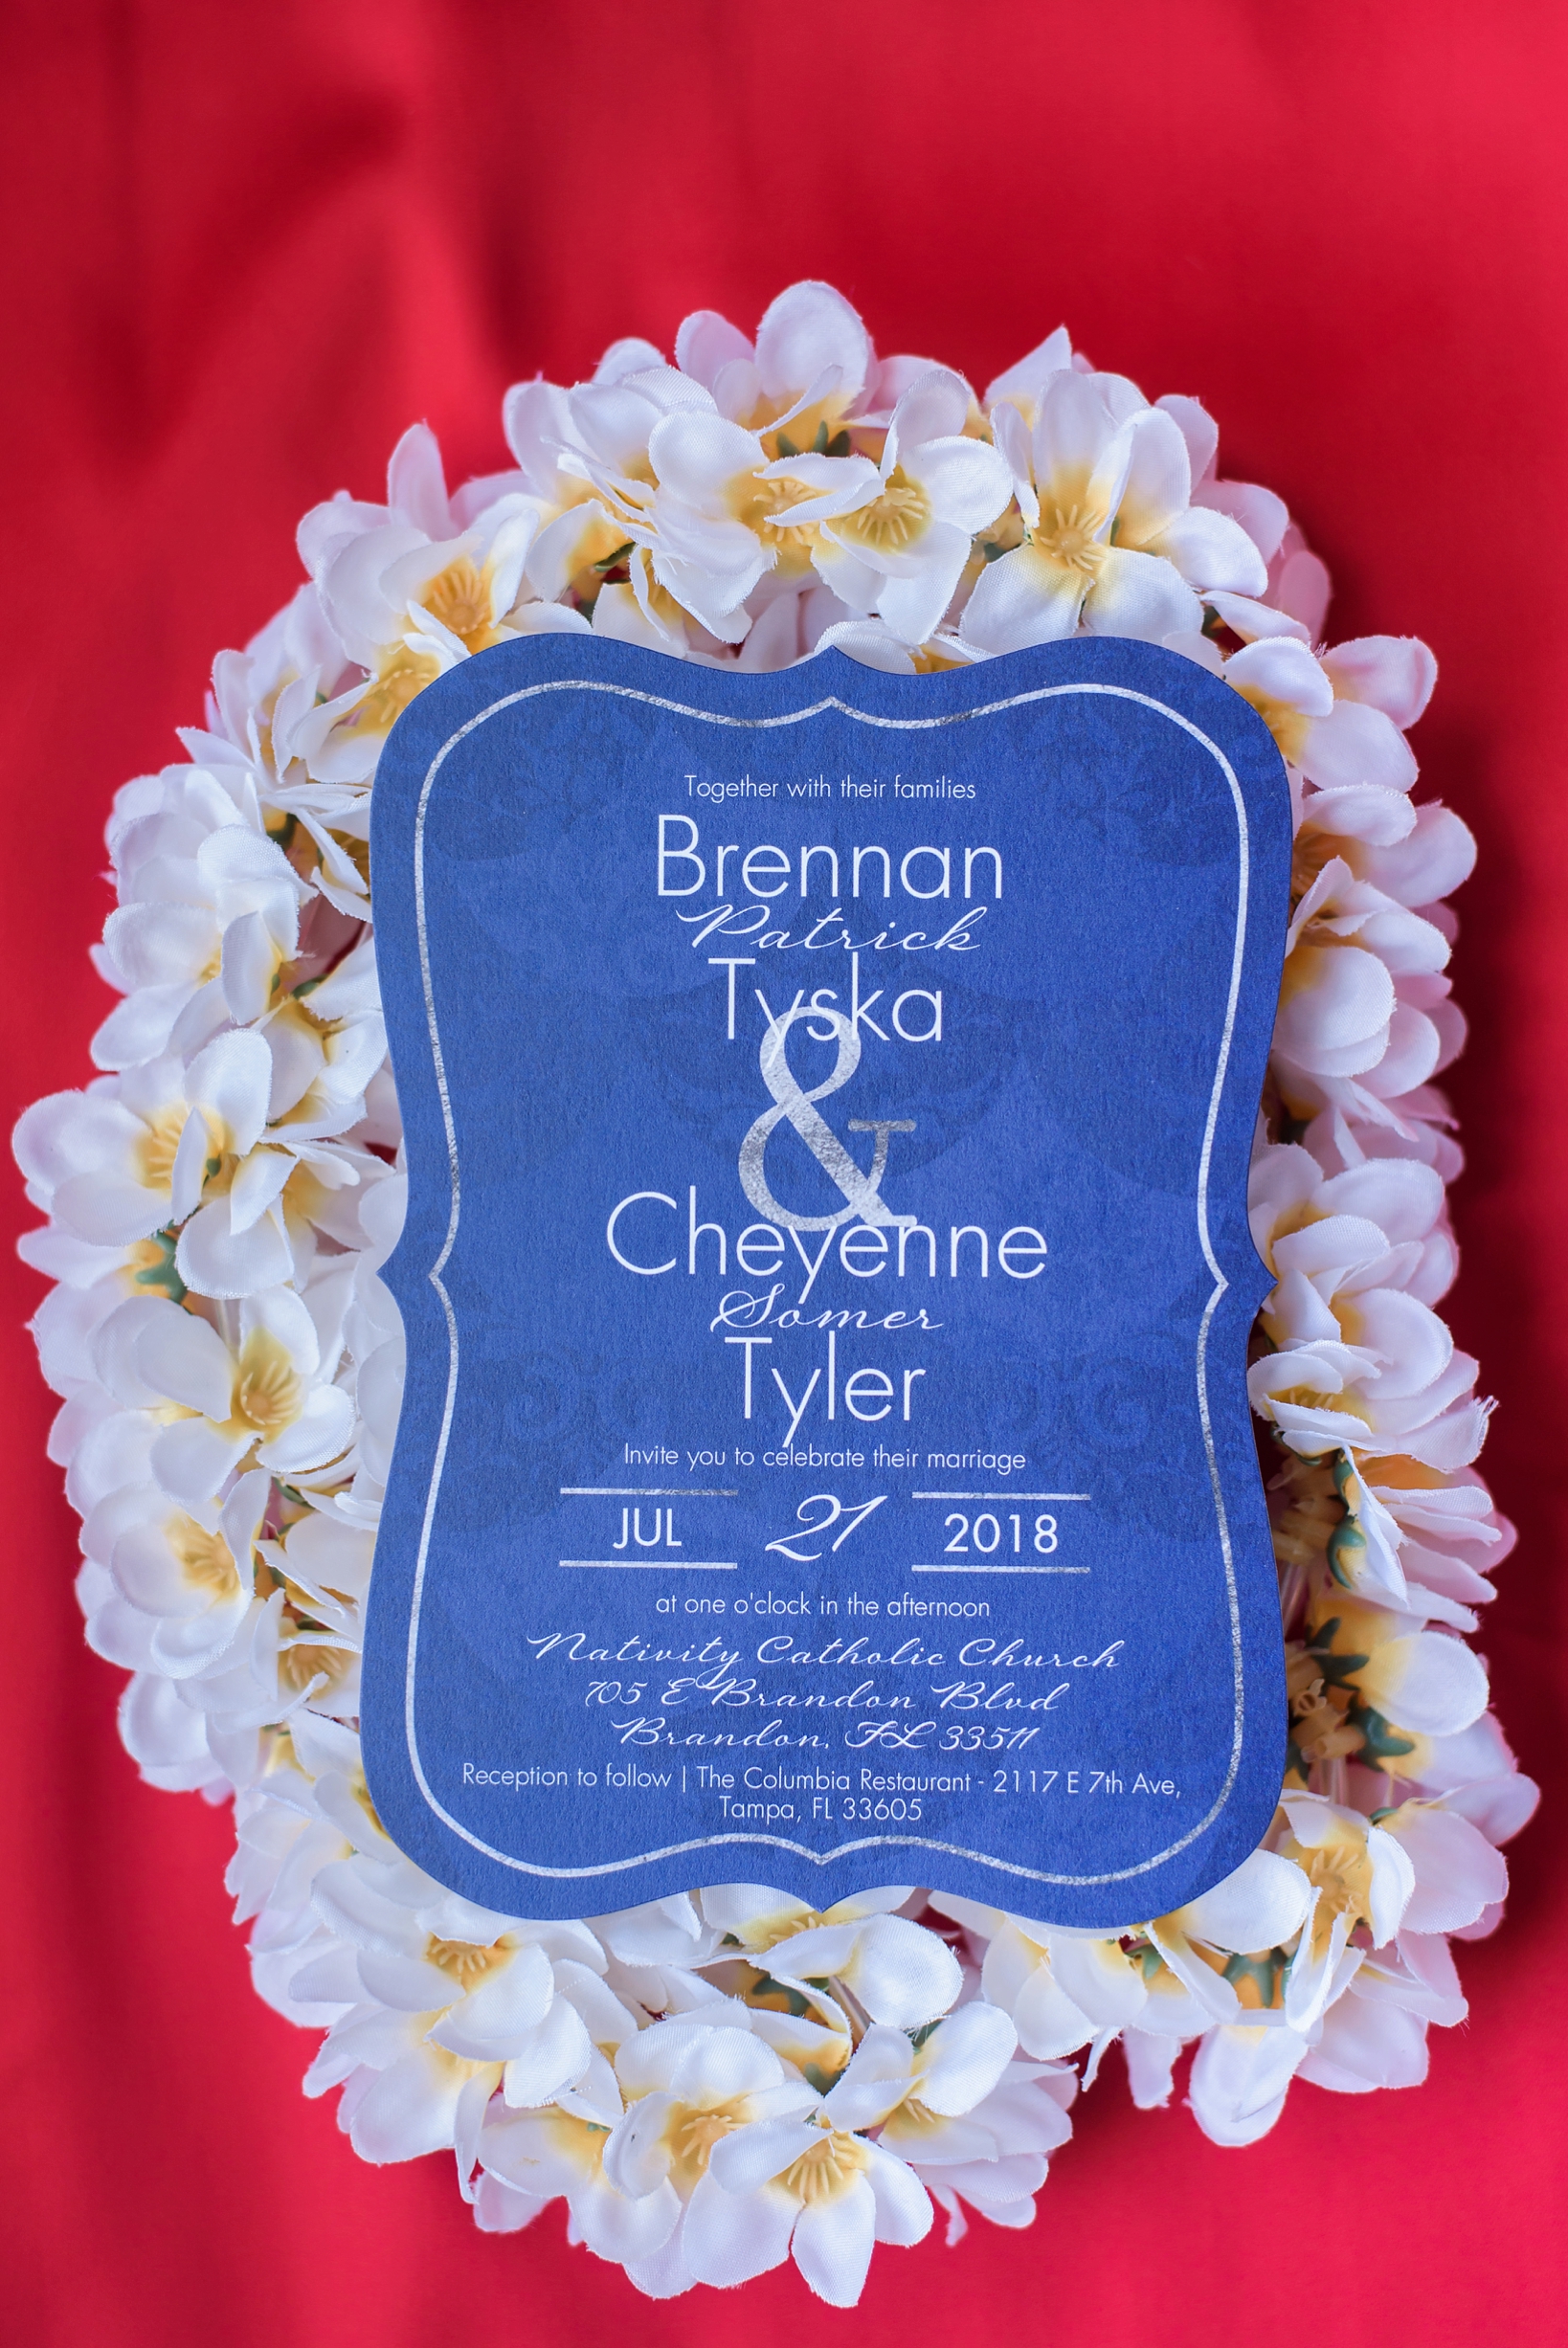 Hawaiian Lei floral background with wedding invitation